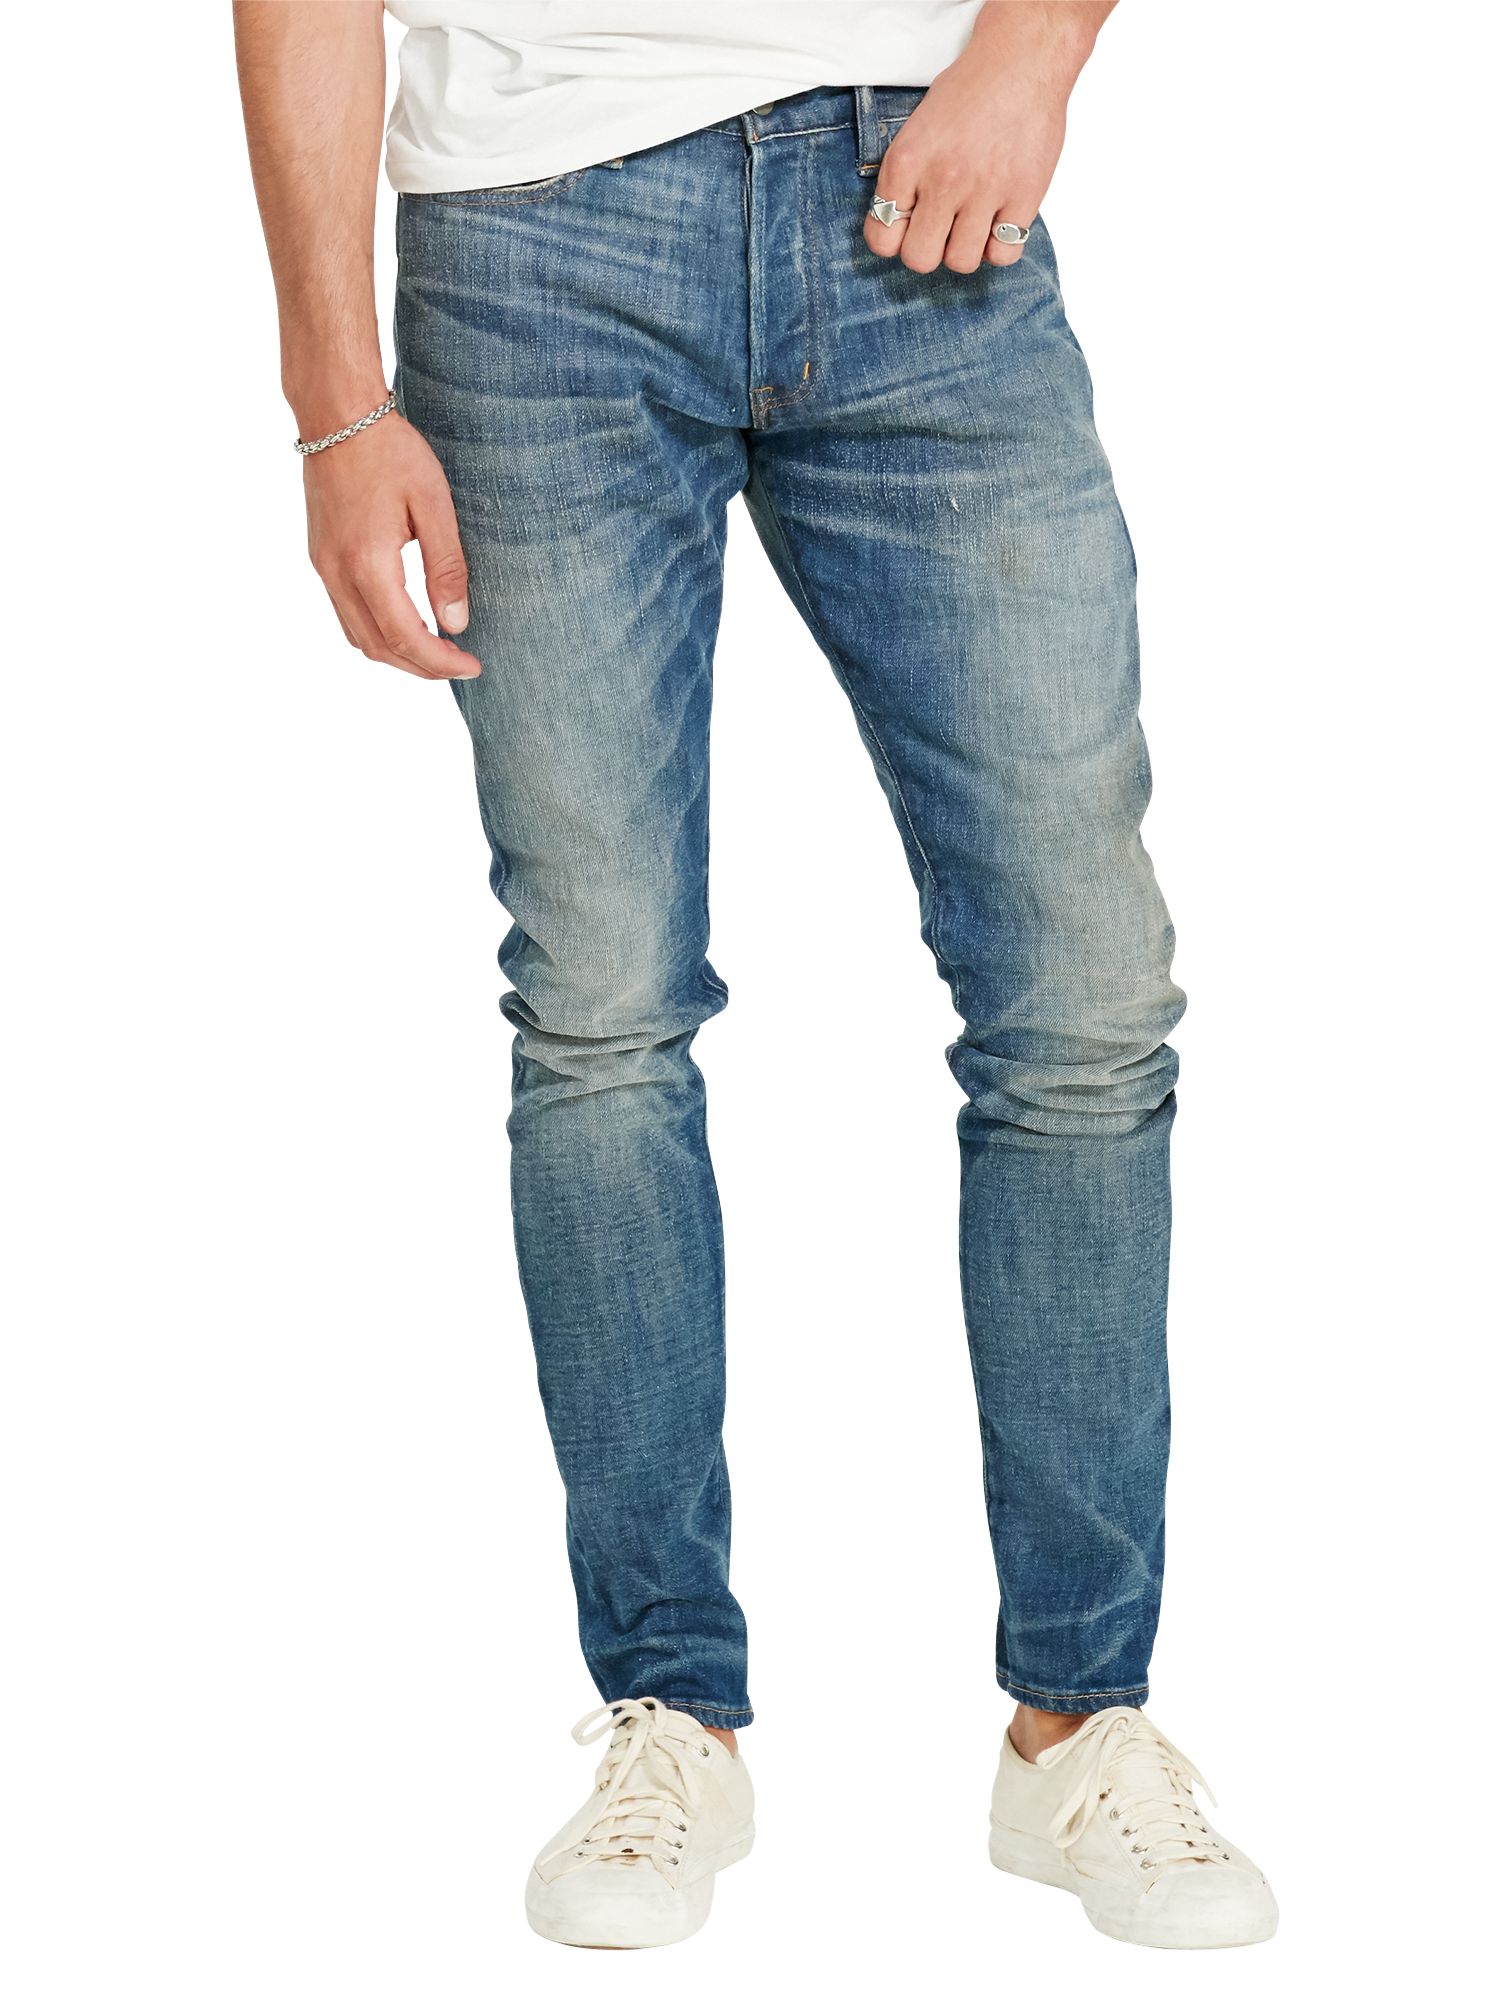 Denim & Supply Ralph Lauren Slim Fit Jeans, Hale